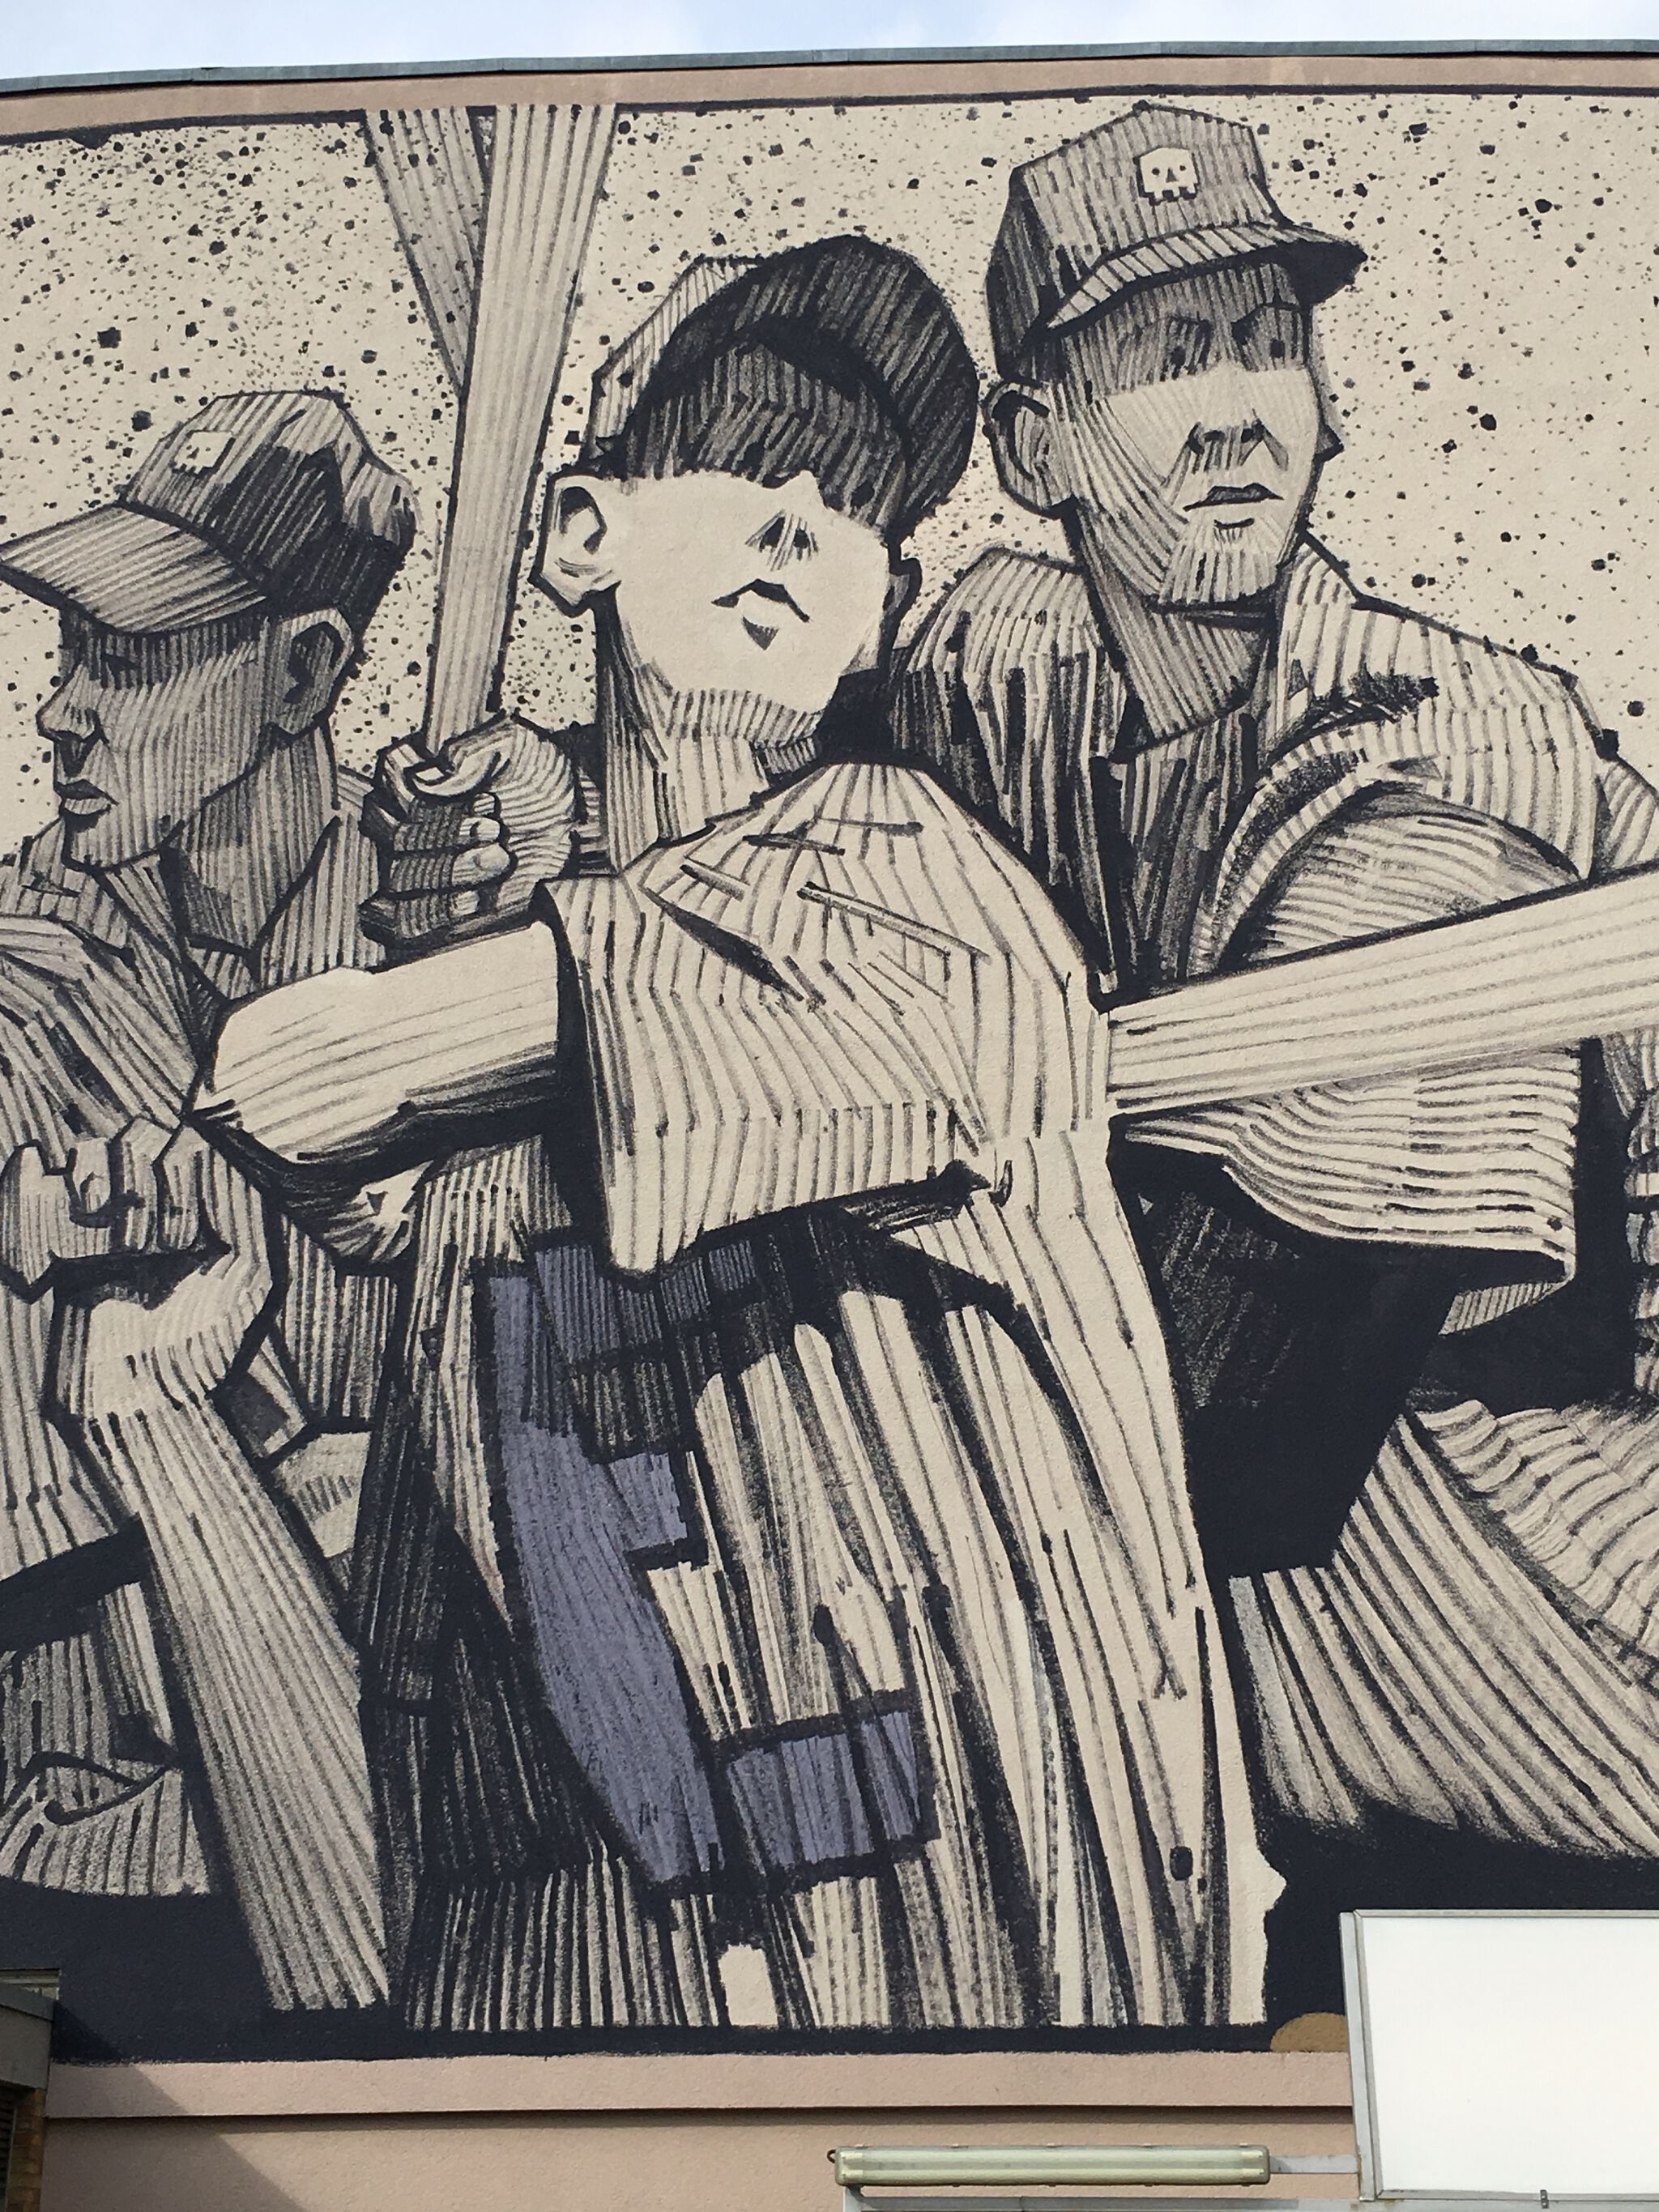 Sainer (Etam Cru)&mdash;Baseball Sketch